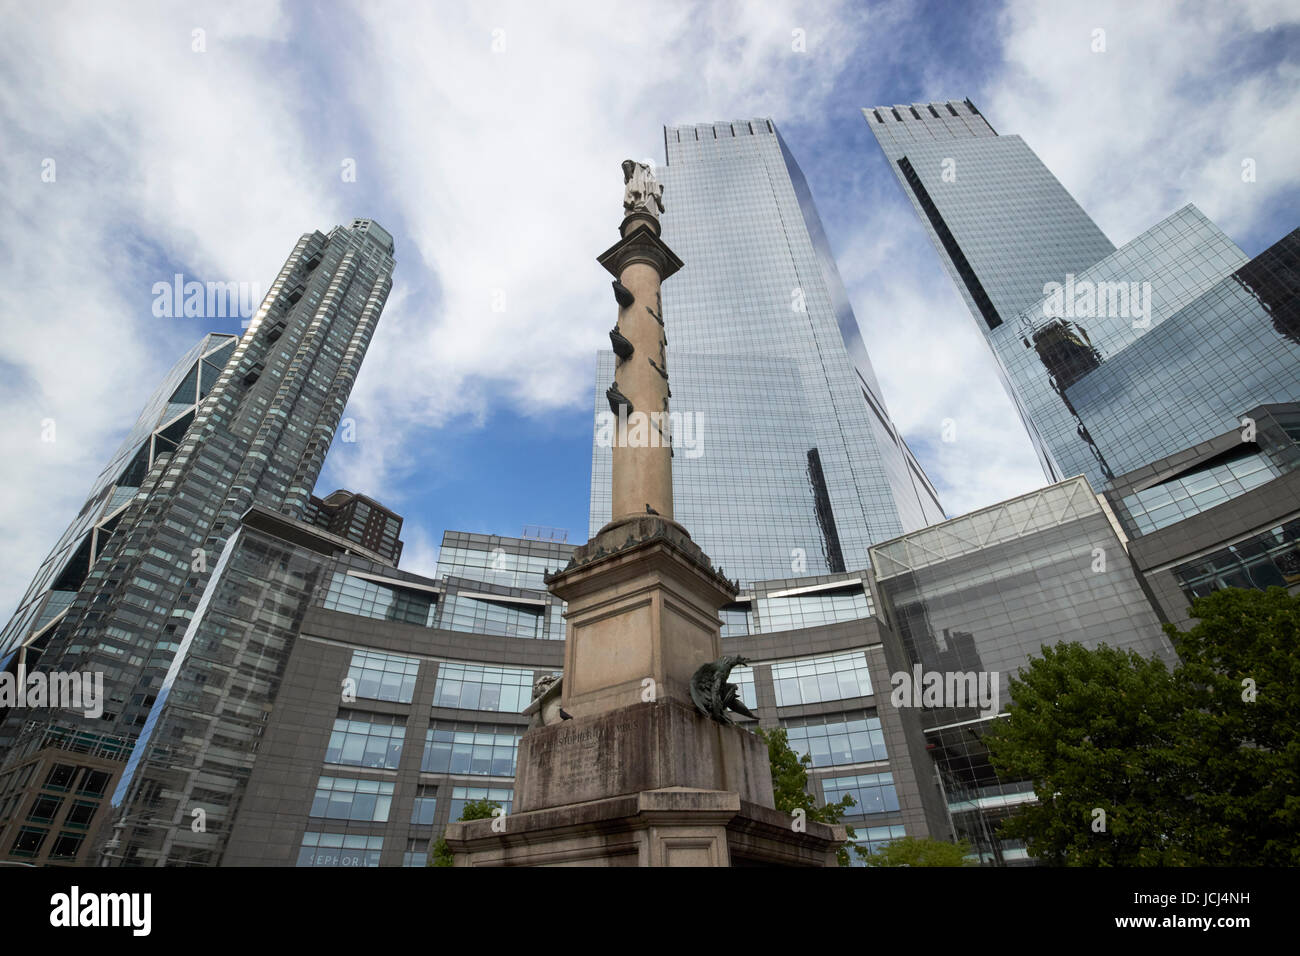 Statua di Cristoforo Colombo a Columbus circle con Time Warner Center central park place e Hearst Tower New York City USA Foto Stock